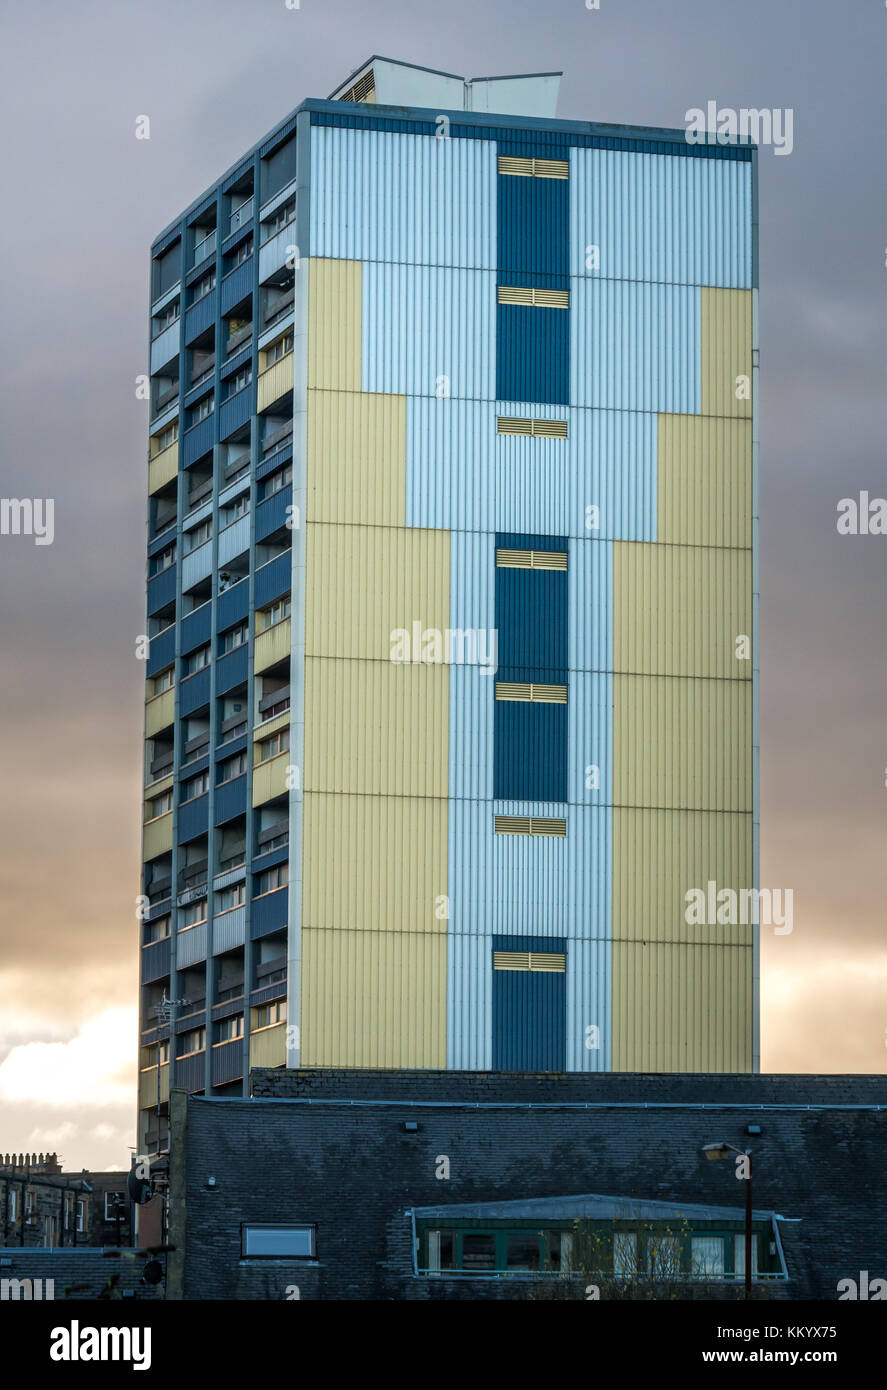 Council flats, social housing tower blocks, Citadel Court, Couper Street, against dark cloudy sky, Leith, Edinburgh, Scotland, UK Stock Photo